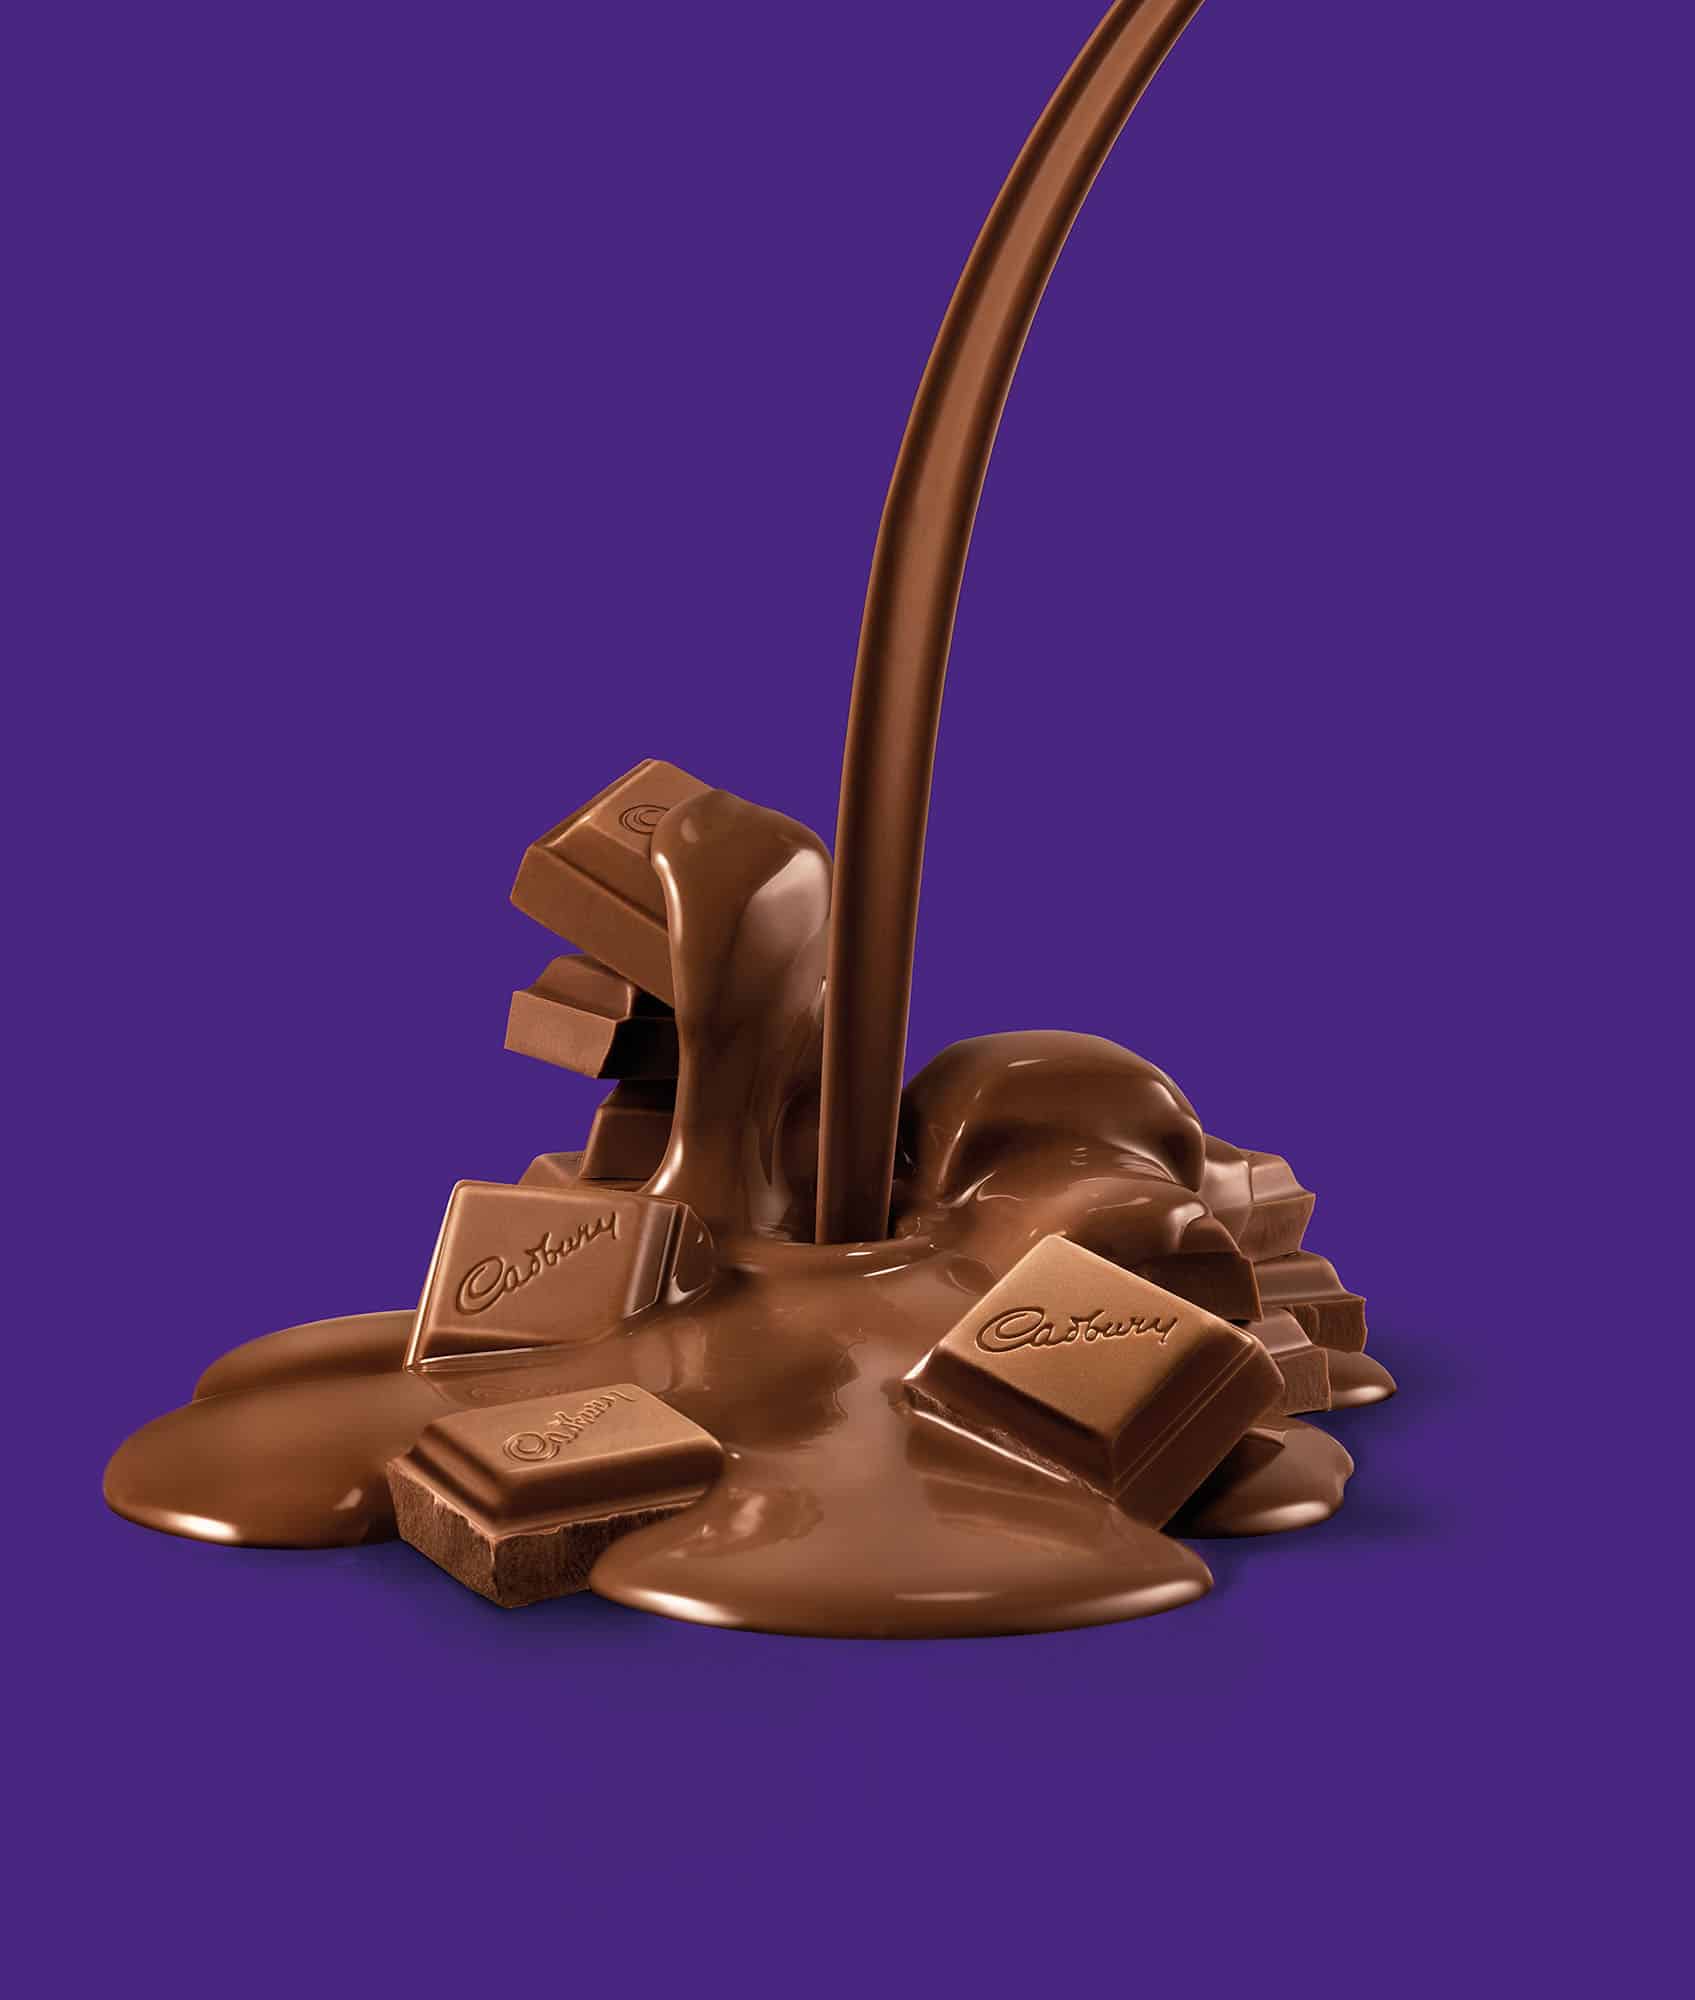 Advertising Cadbury's Dairy Milk Melting Chocolate